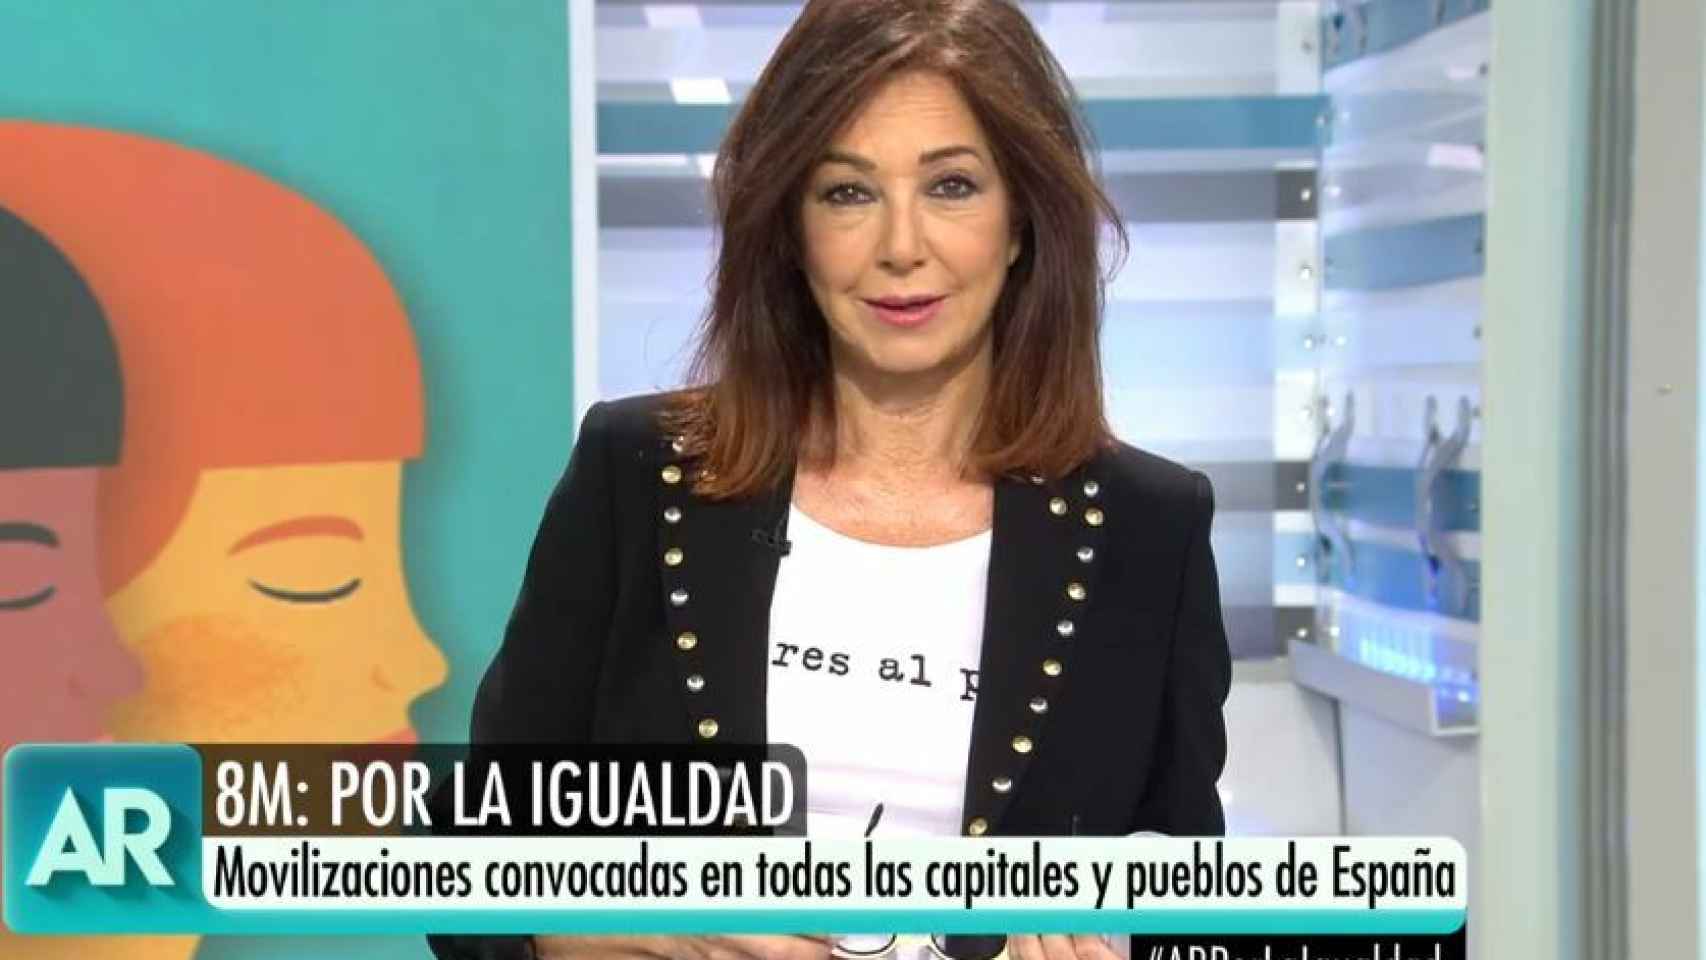 Ana Rosa Quintana con una camiseta que reza 'Mujeres al poder'.